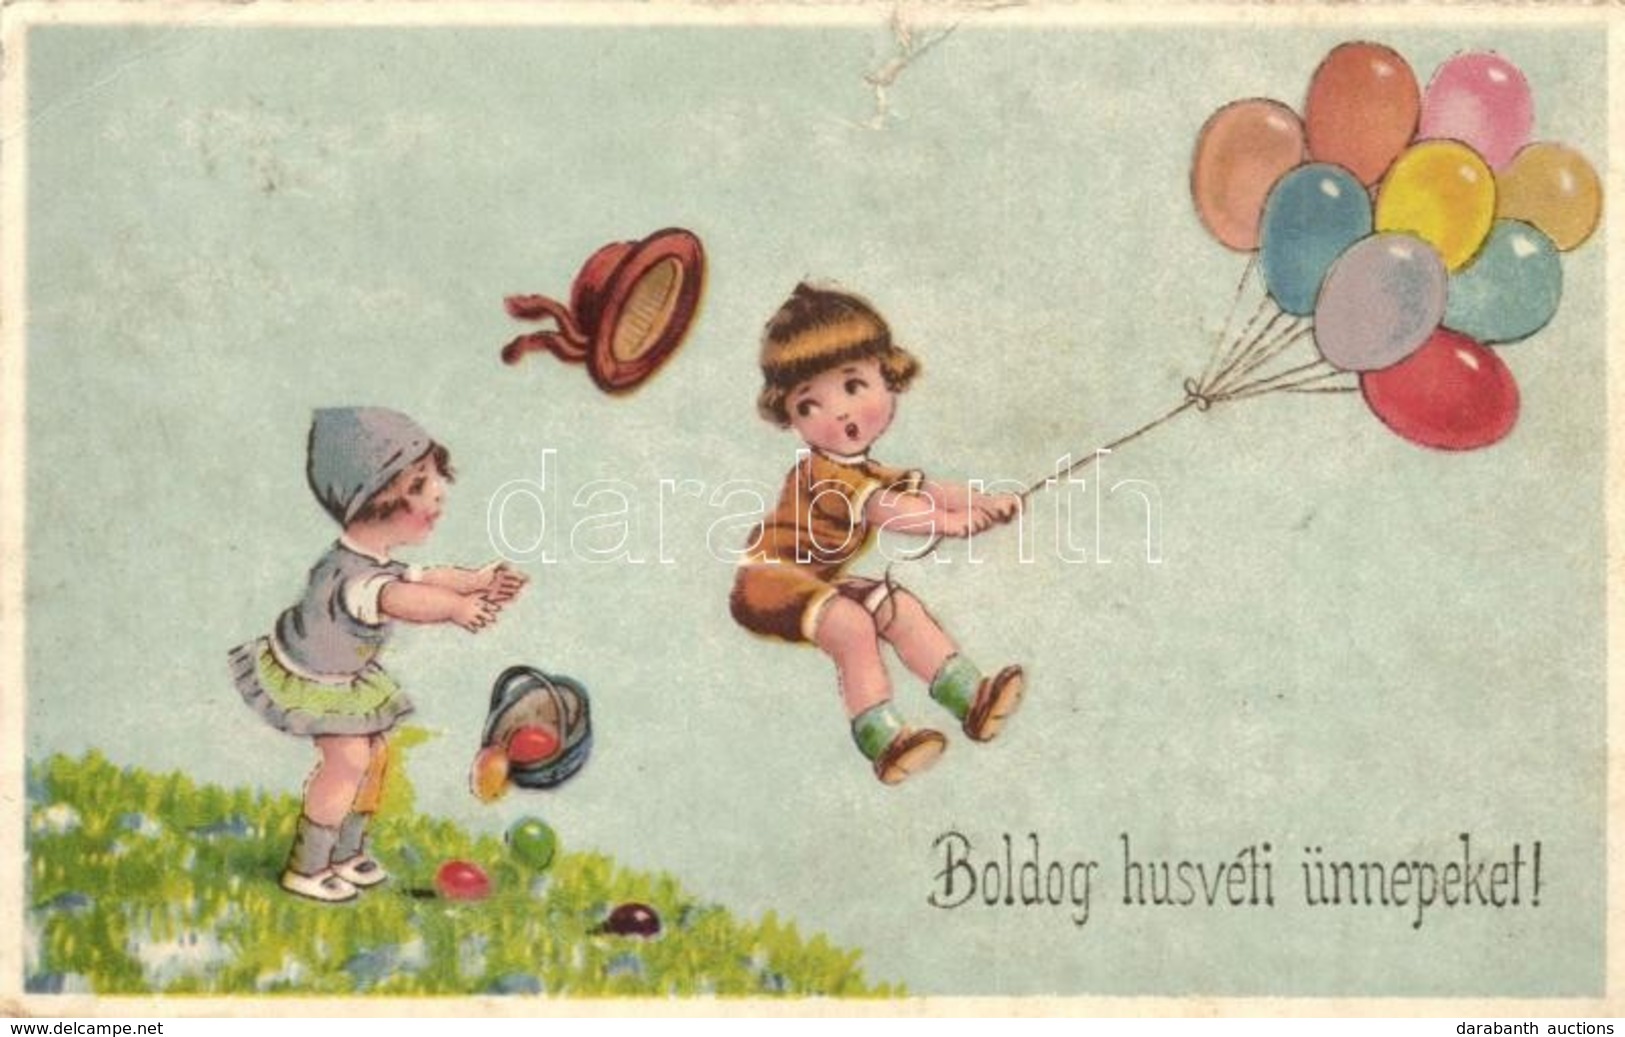 * T4 'Kellemes Húsvéti ünnepeket' / Easter Greeting Card, Children, Airballoons, Eggs (b) - Ohne Zuordnung